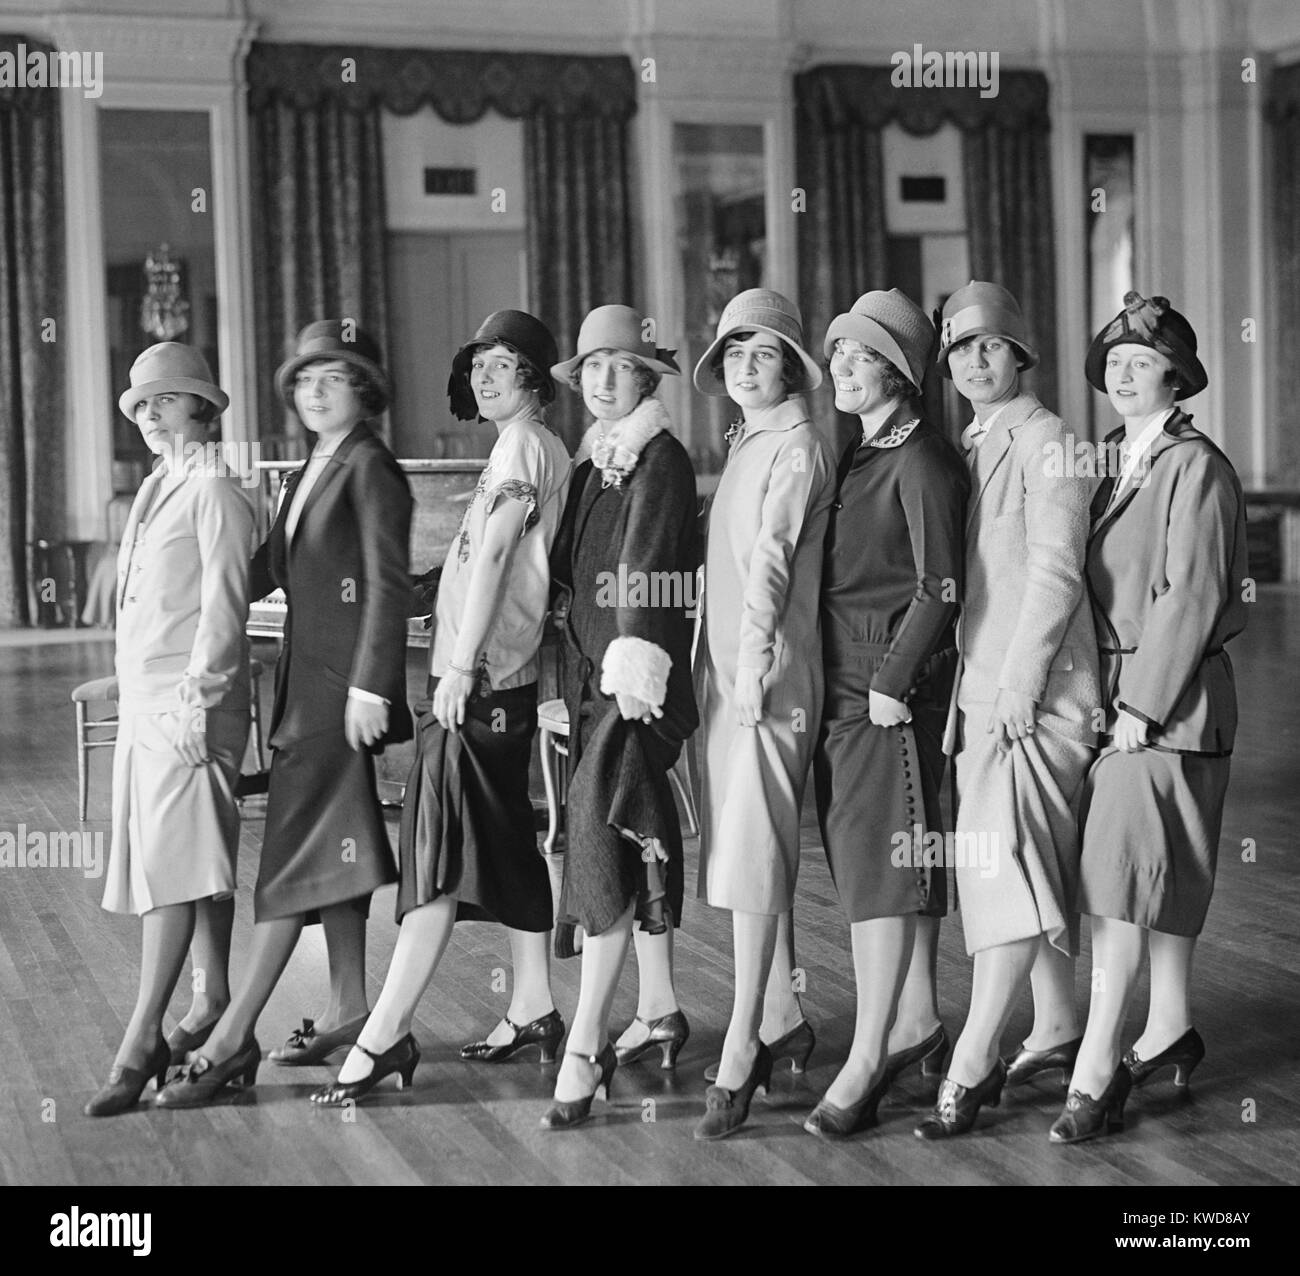 'Washington Debs' rehearsing for comedy March 25, 1923. Washington, D.C. vicinity (BSLOC 2015 17 211) Stock Photo